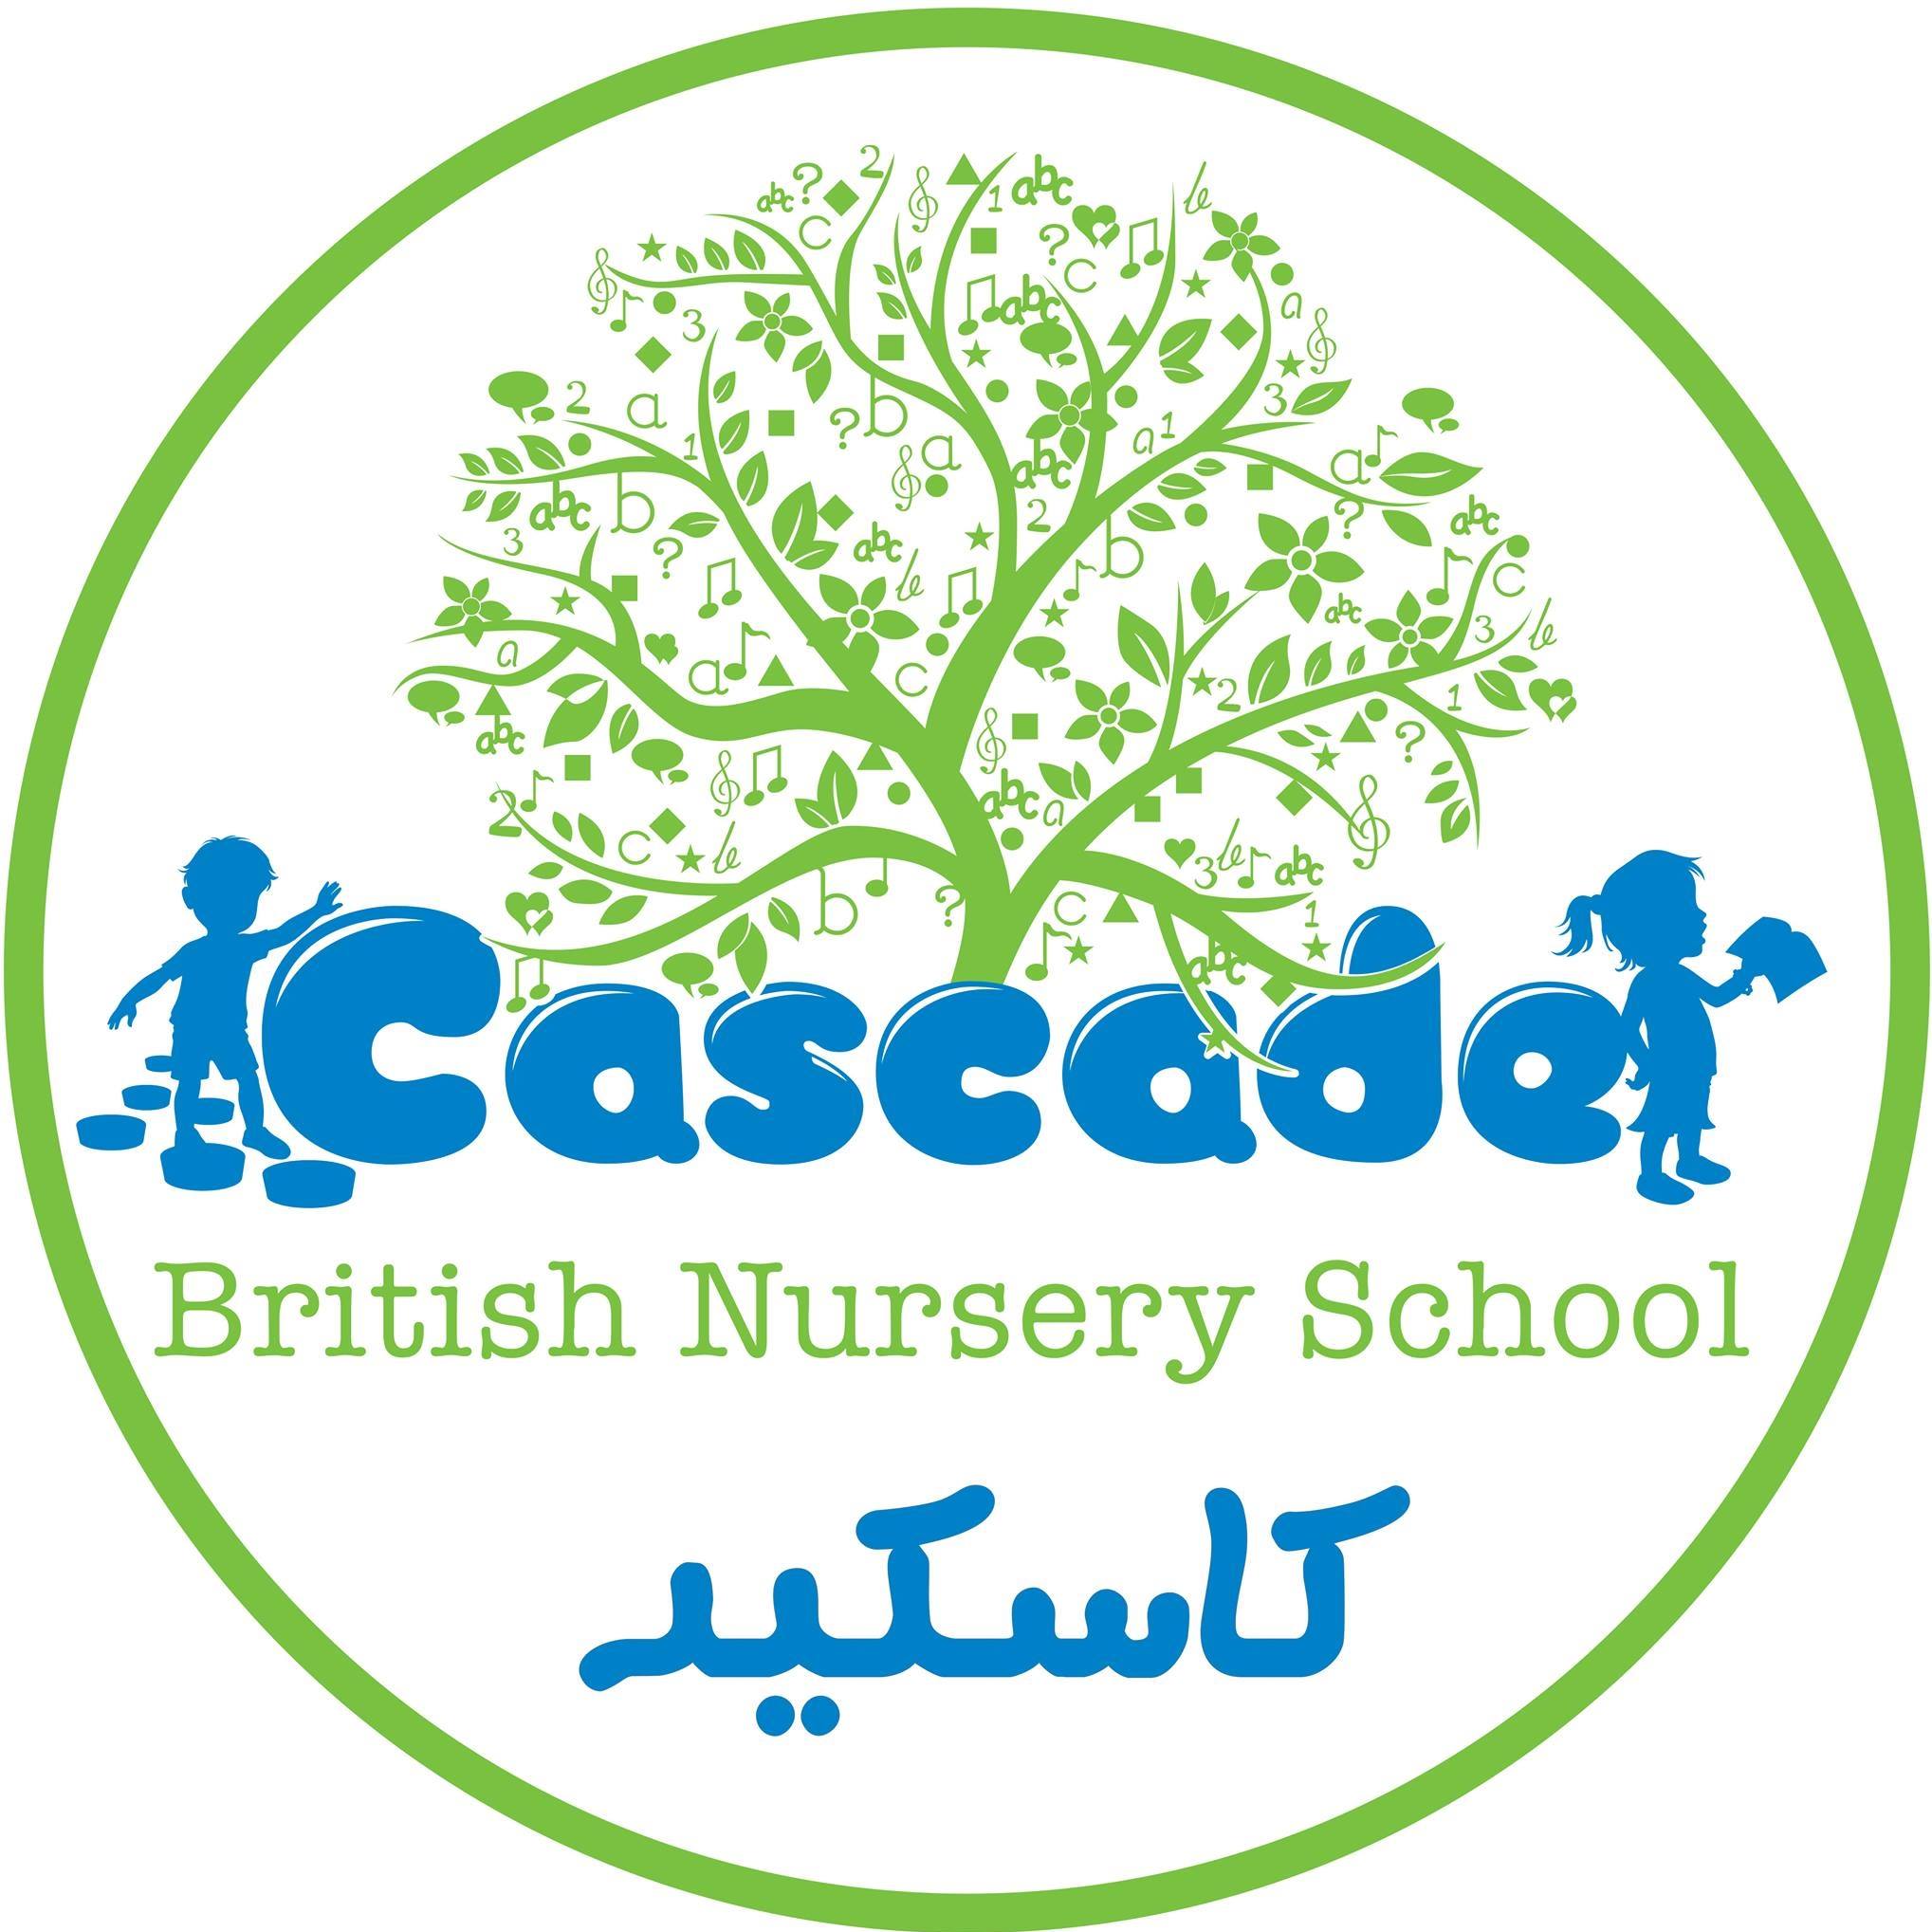 Cascade British Nursery School